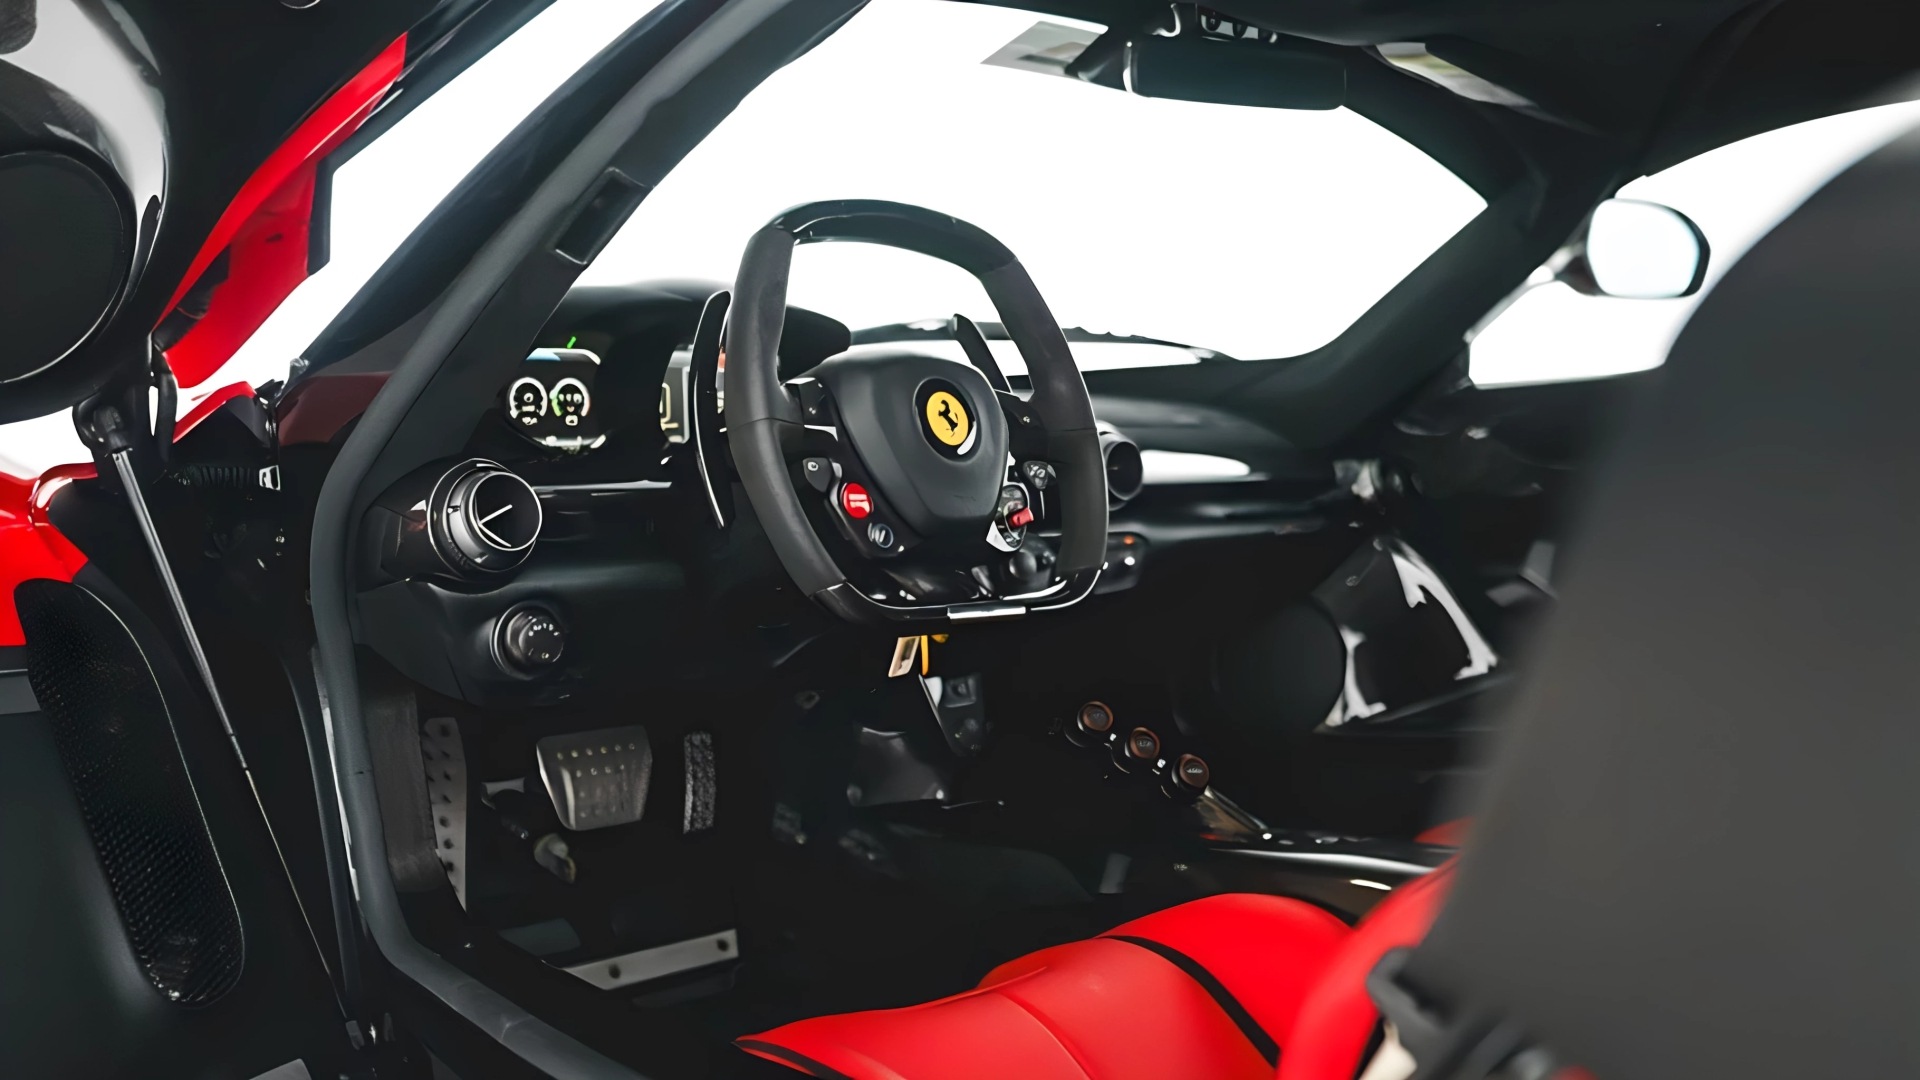 The Interior, Steering, And Dashboard Of A 2014 Ferrari La Ferrari Prototype (Credits SBX)